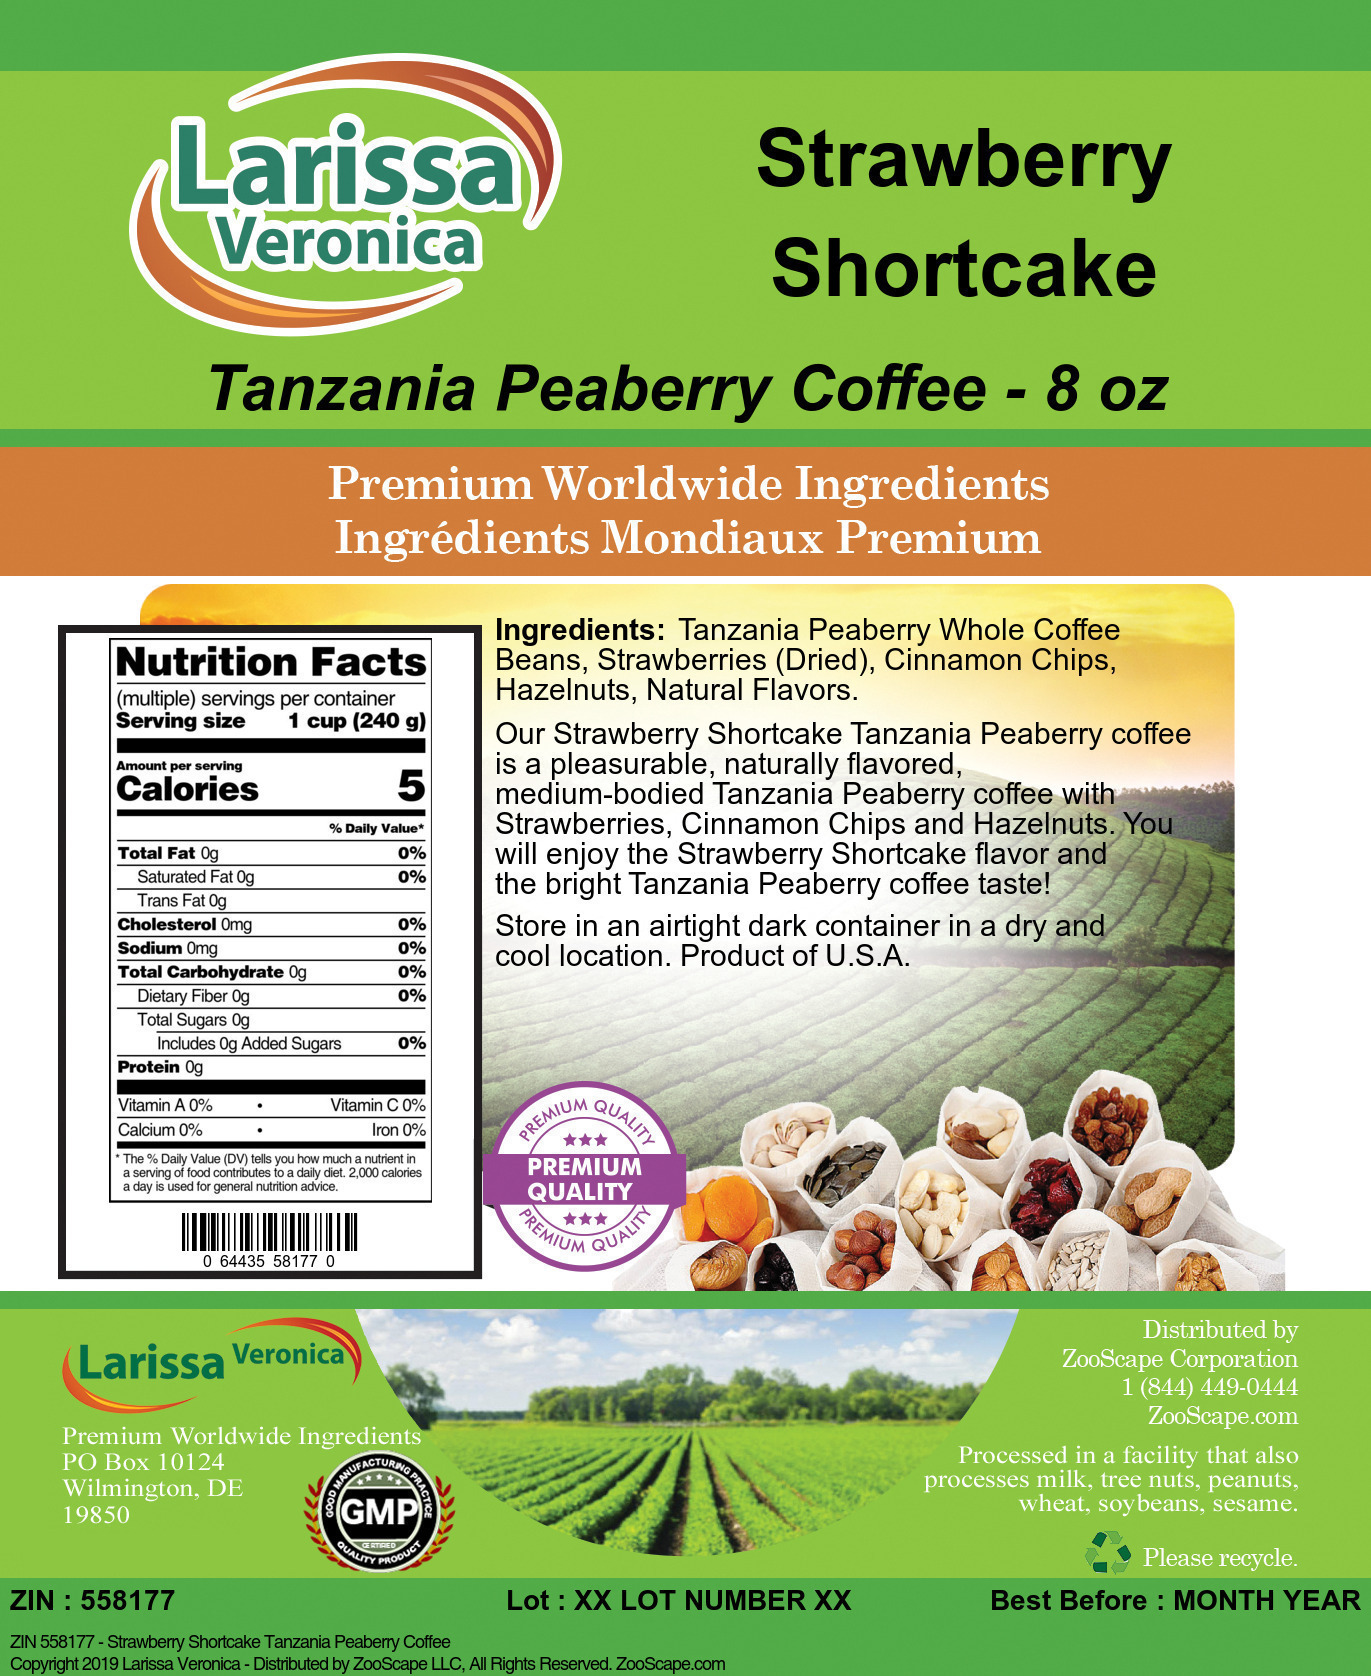 Strawberry Shortcake Tanzania Peaberry Coffee - Label